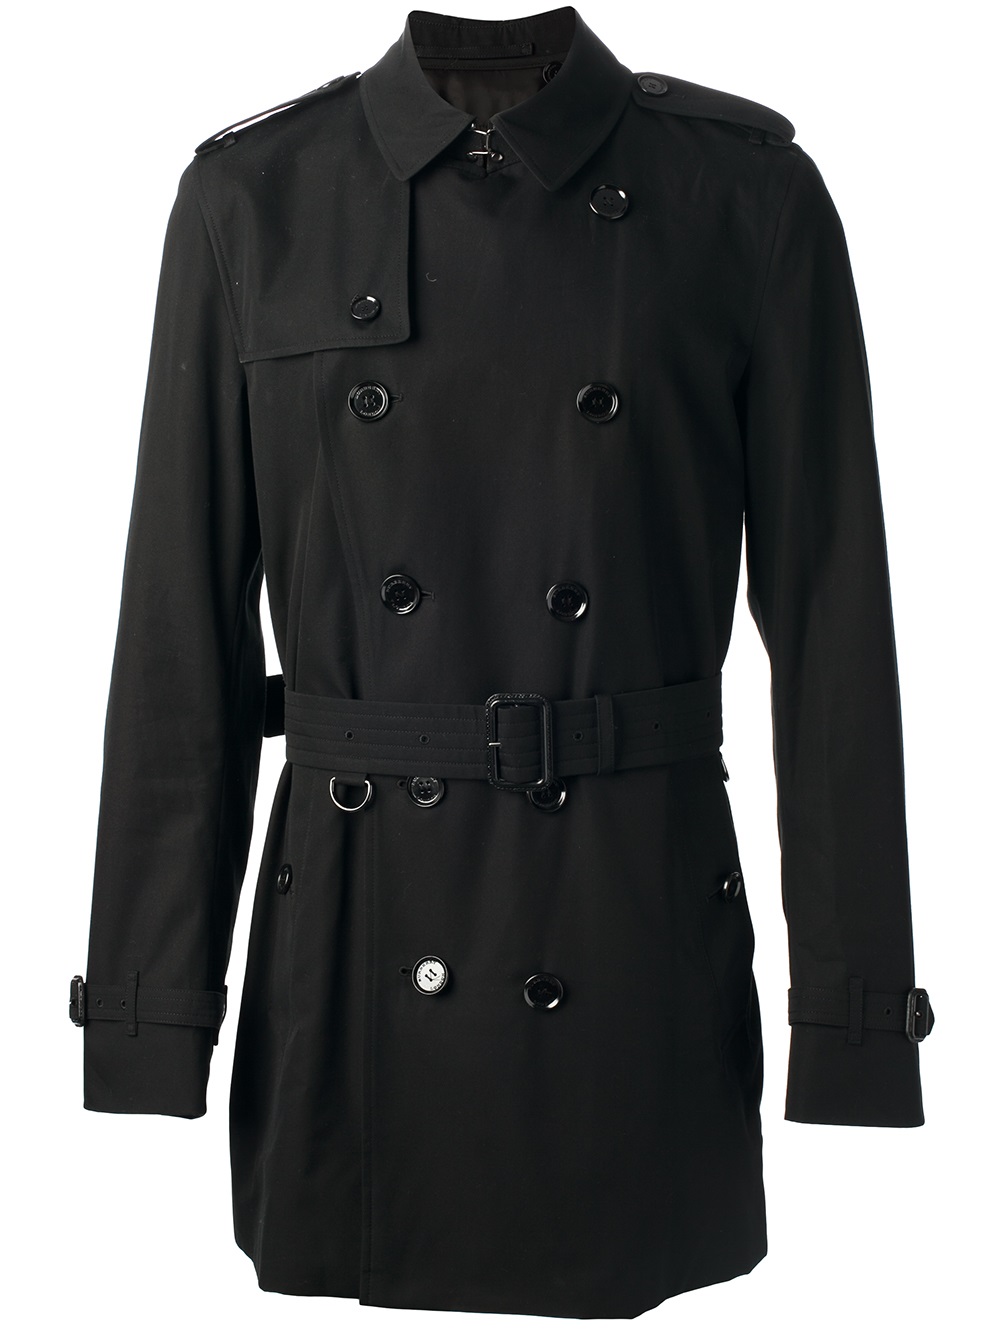 Burberry Trench Coat in Black for Men - Lyst